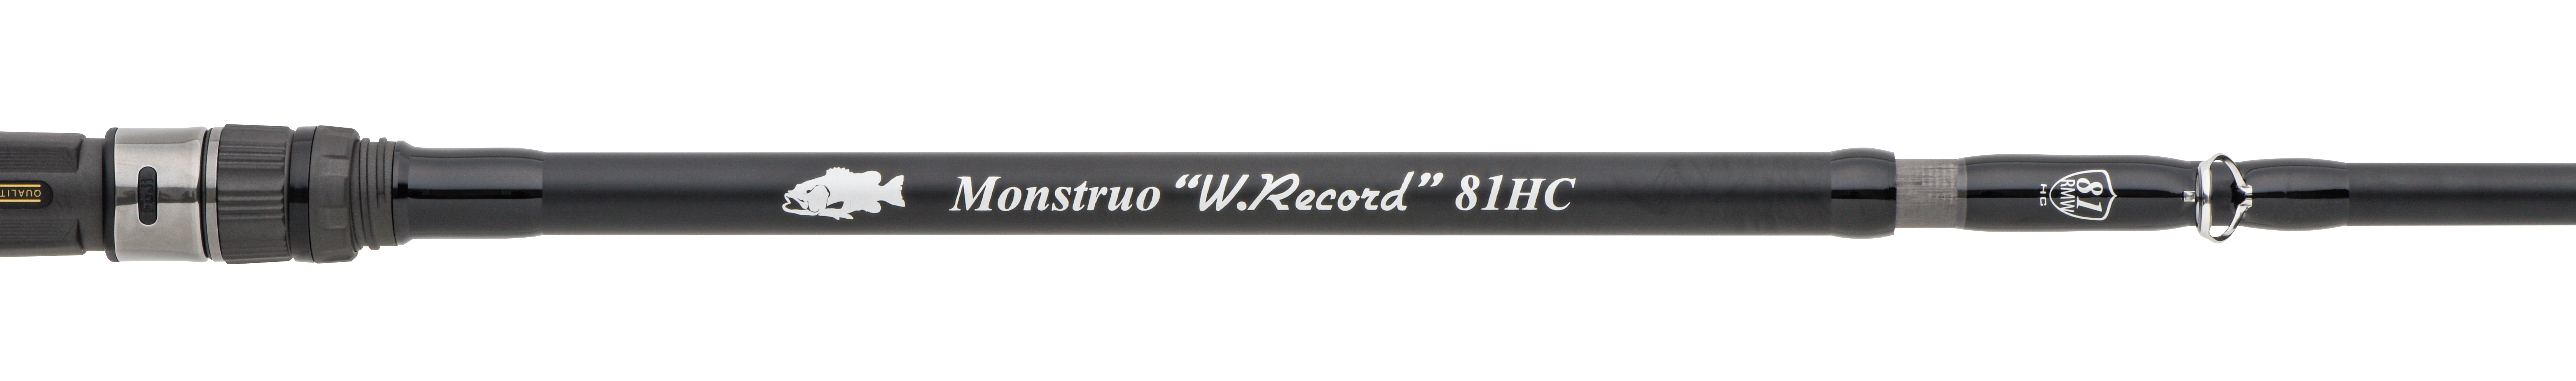 Monstruo”W.Record”81HC | ロゴ